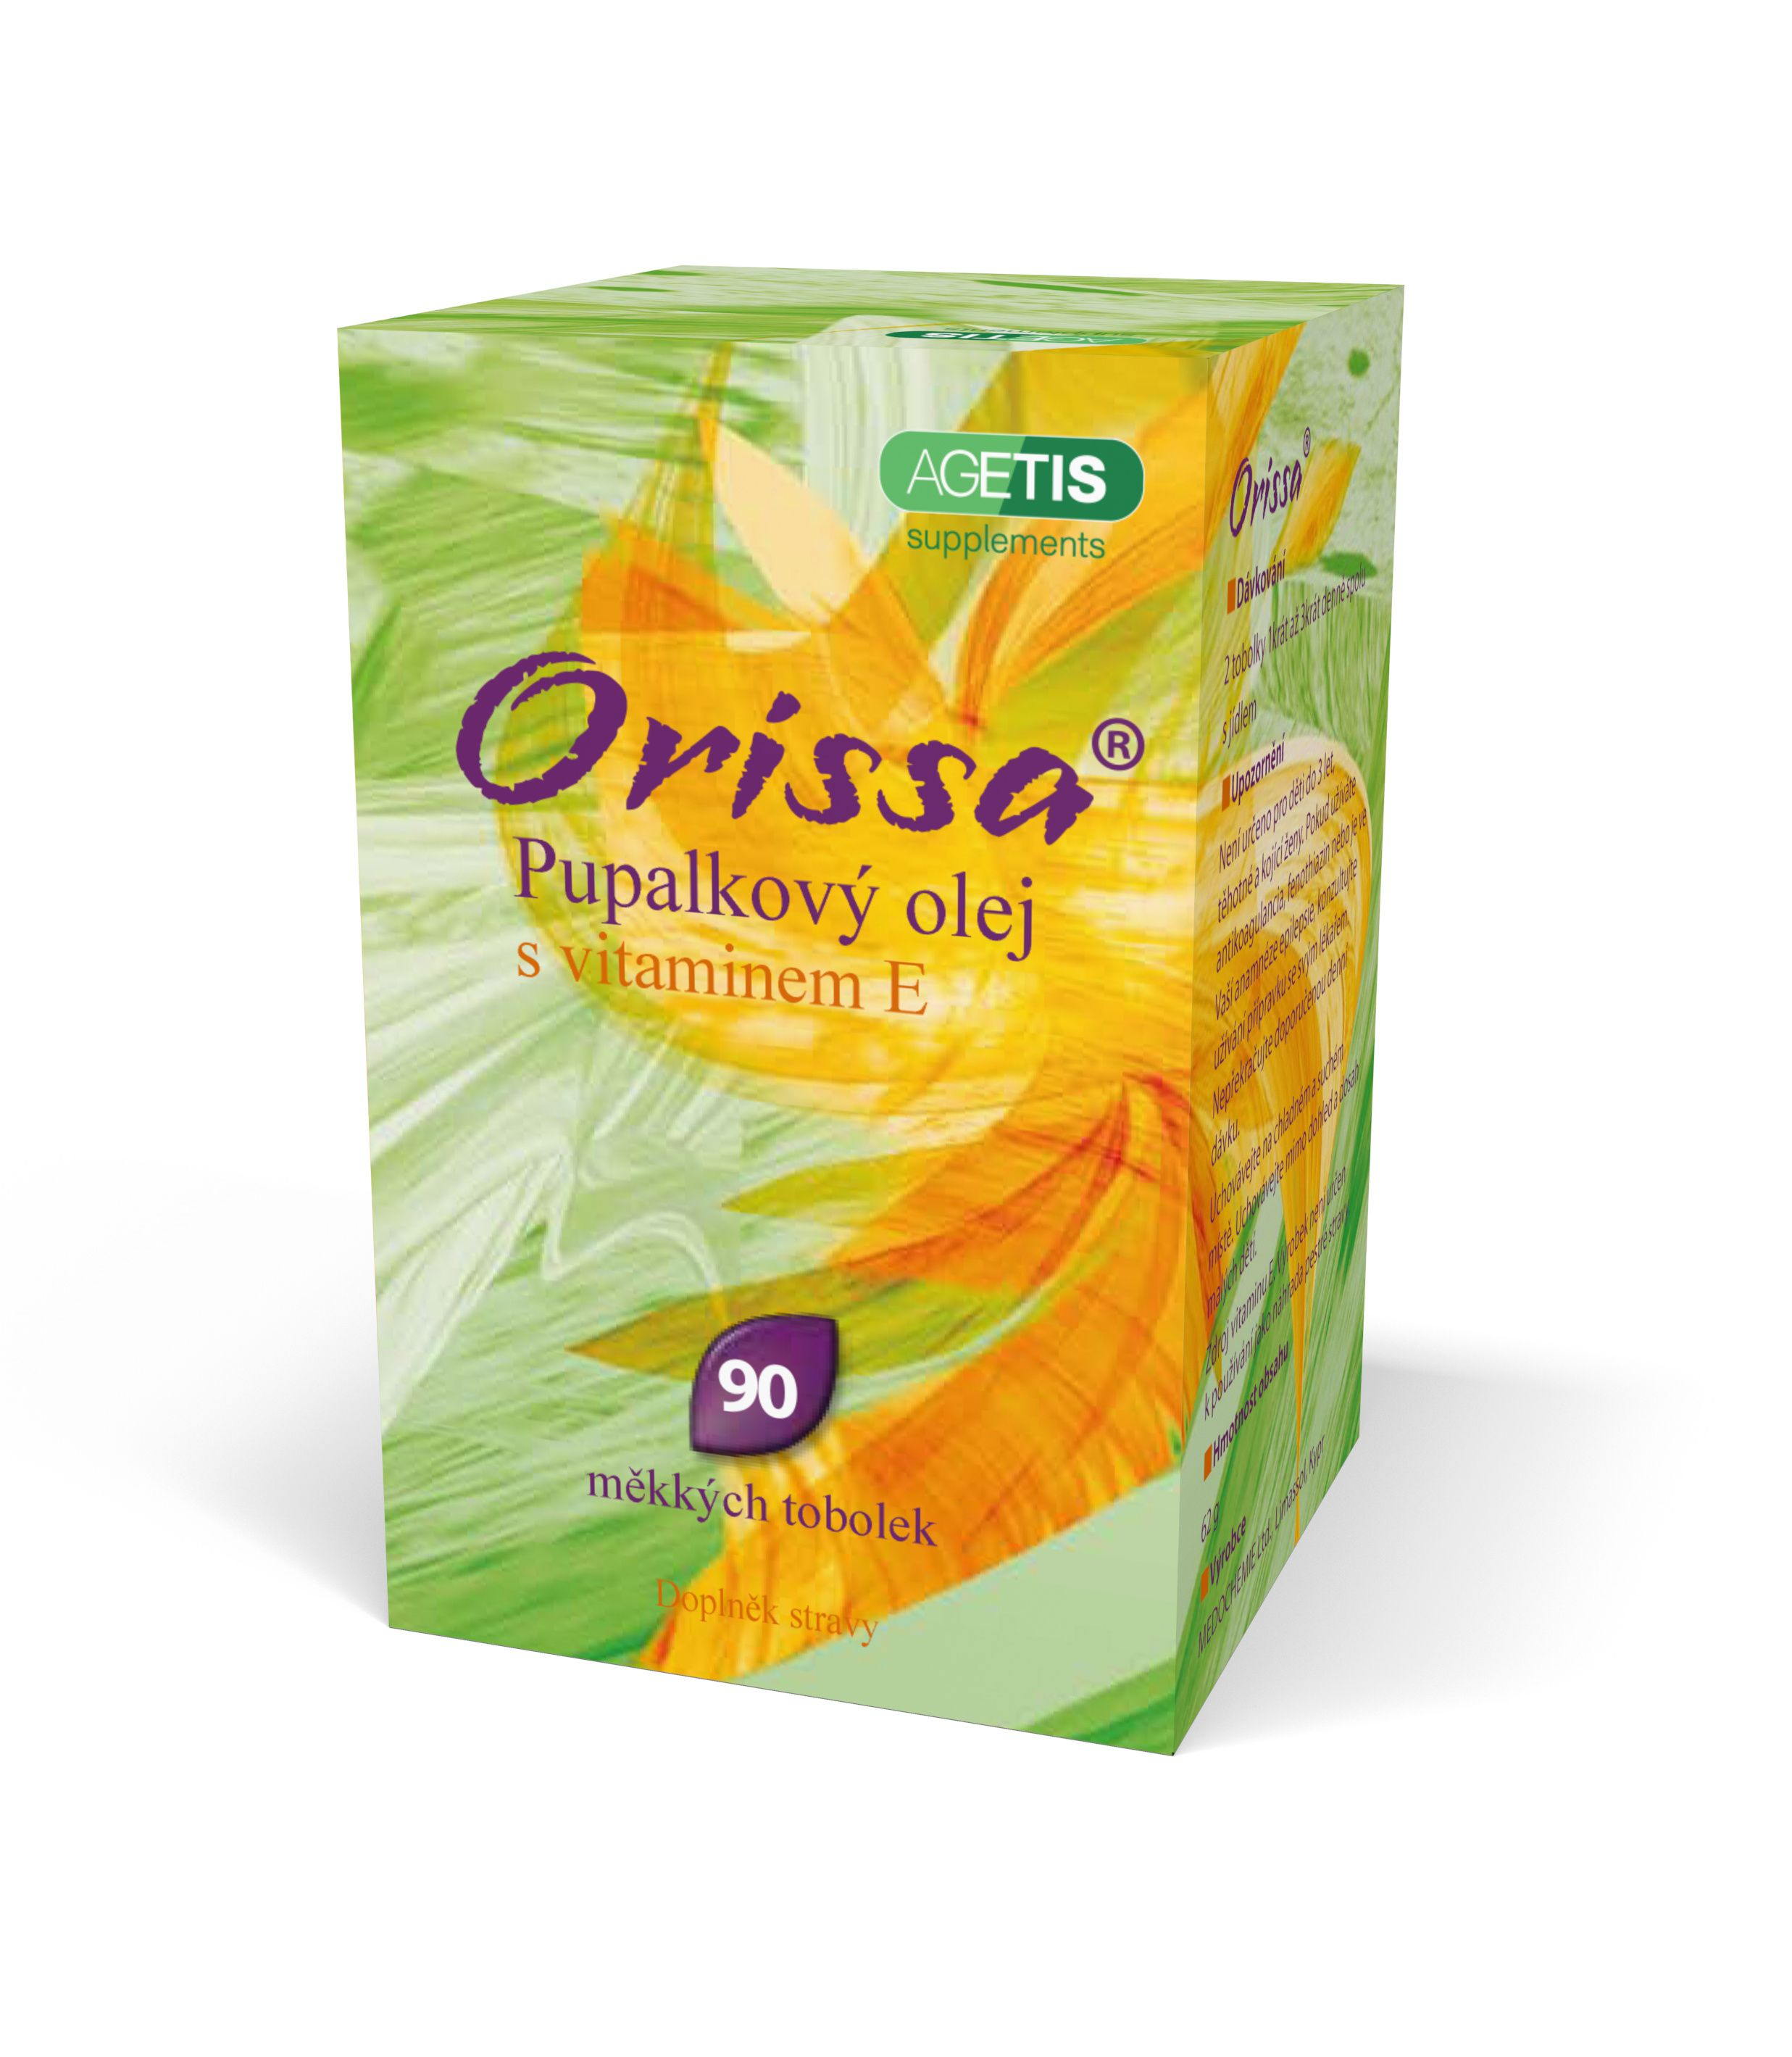 Orissa Pupalkový olej s vitaminem E 90 tobolek